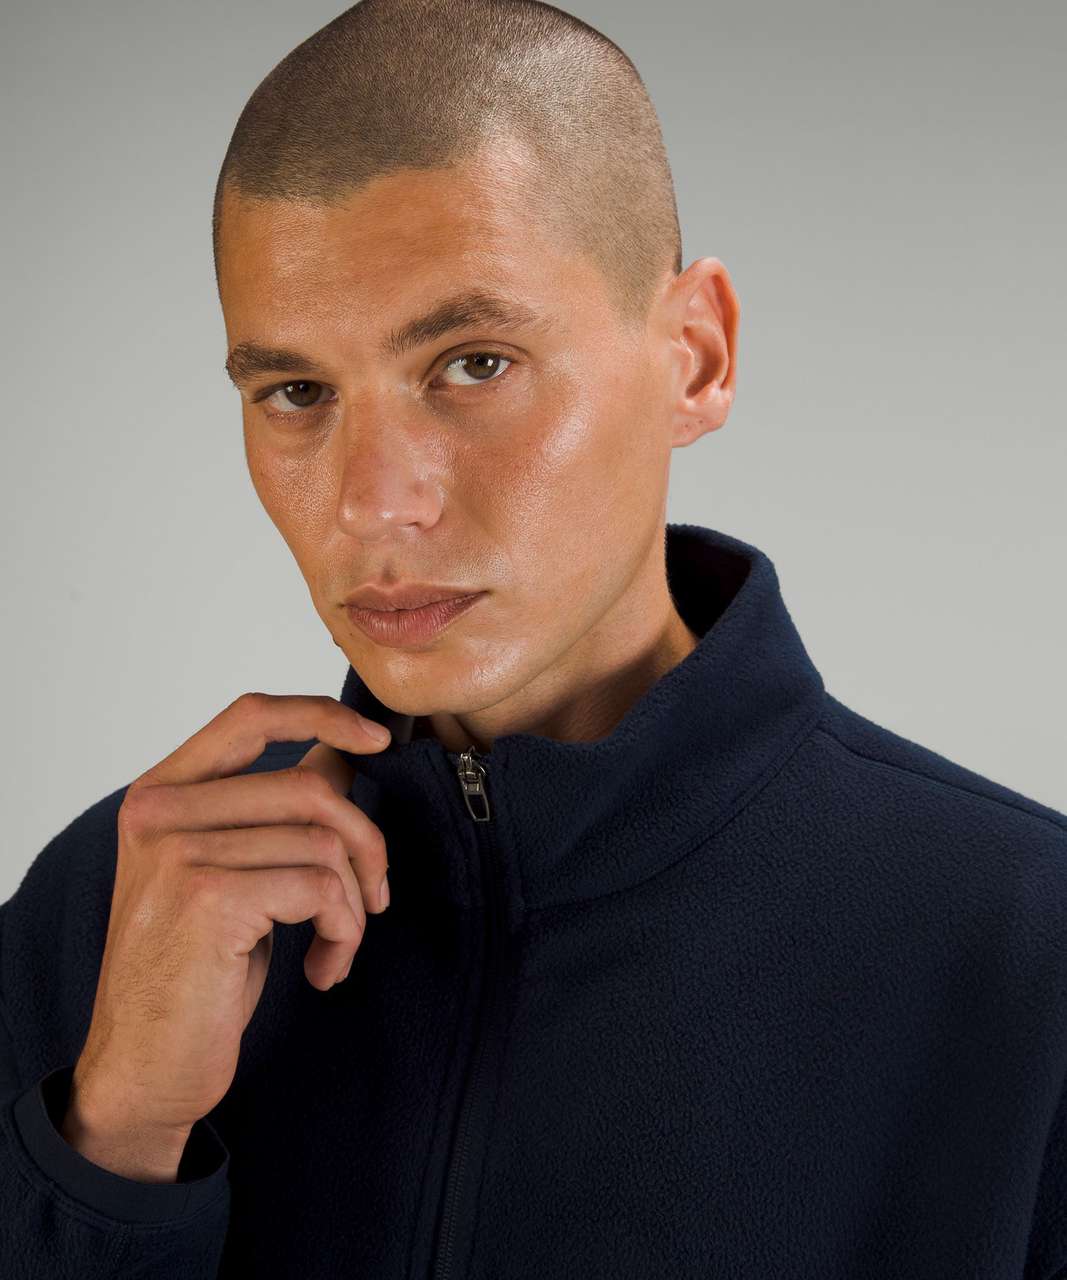 Louis Vuitton blue Printed Half-Zip Polo Sweatshirt